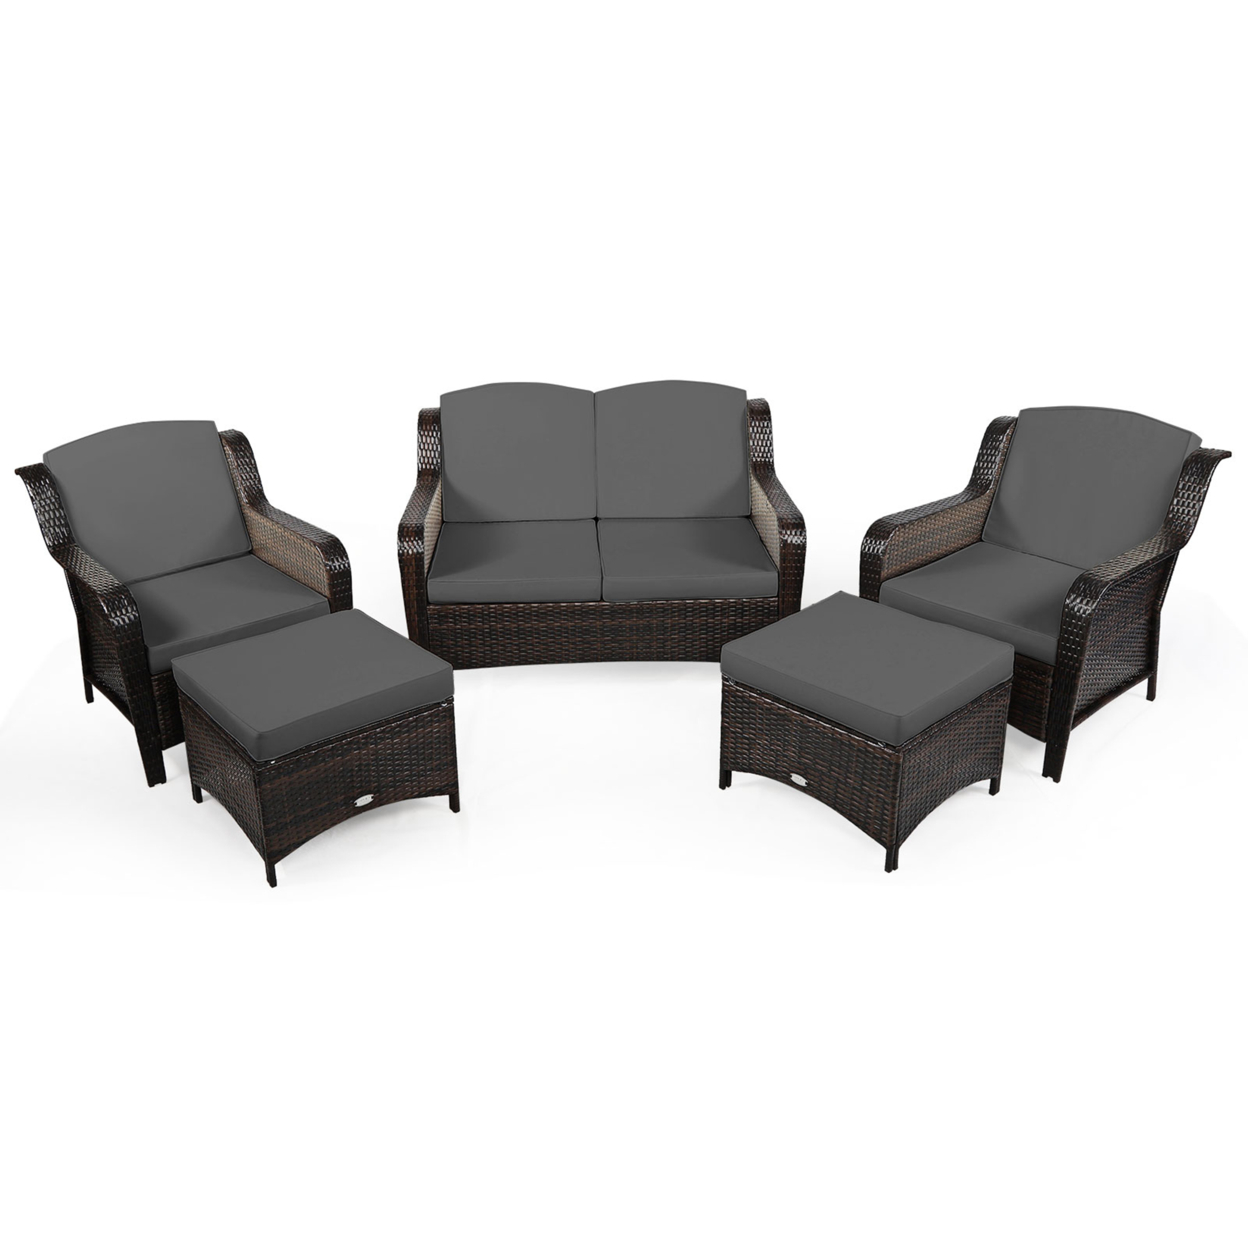 5PCS Rattan Patio Conversation Sofa Furniture Set Outdoor W/ Grey Cushions